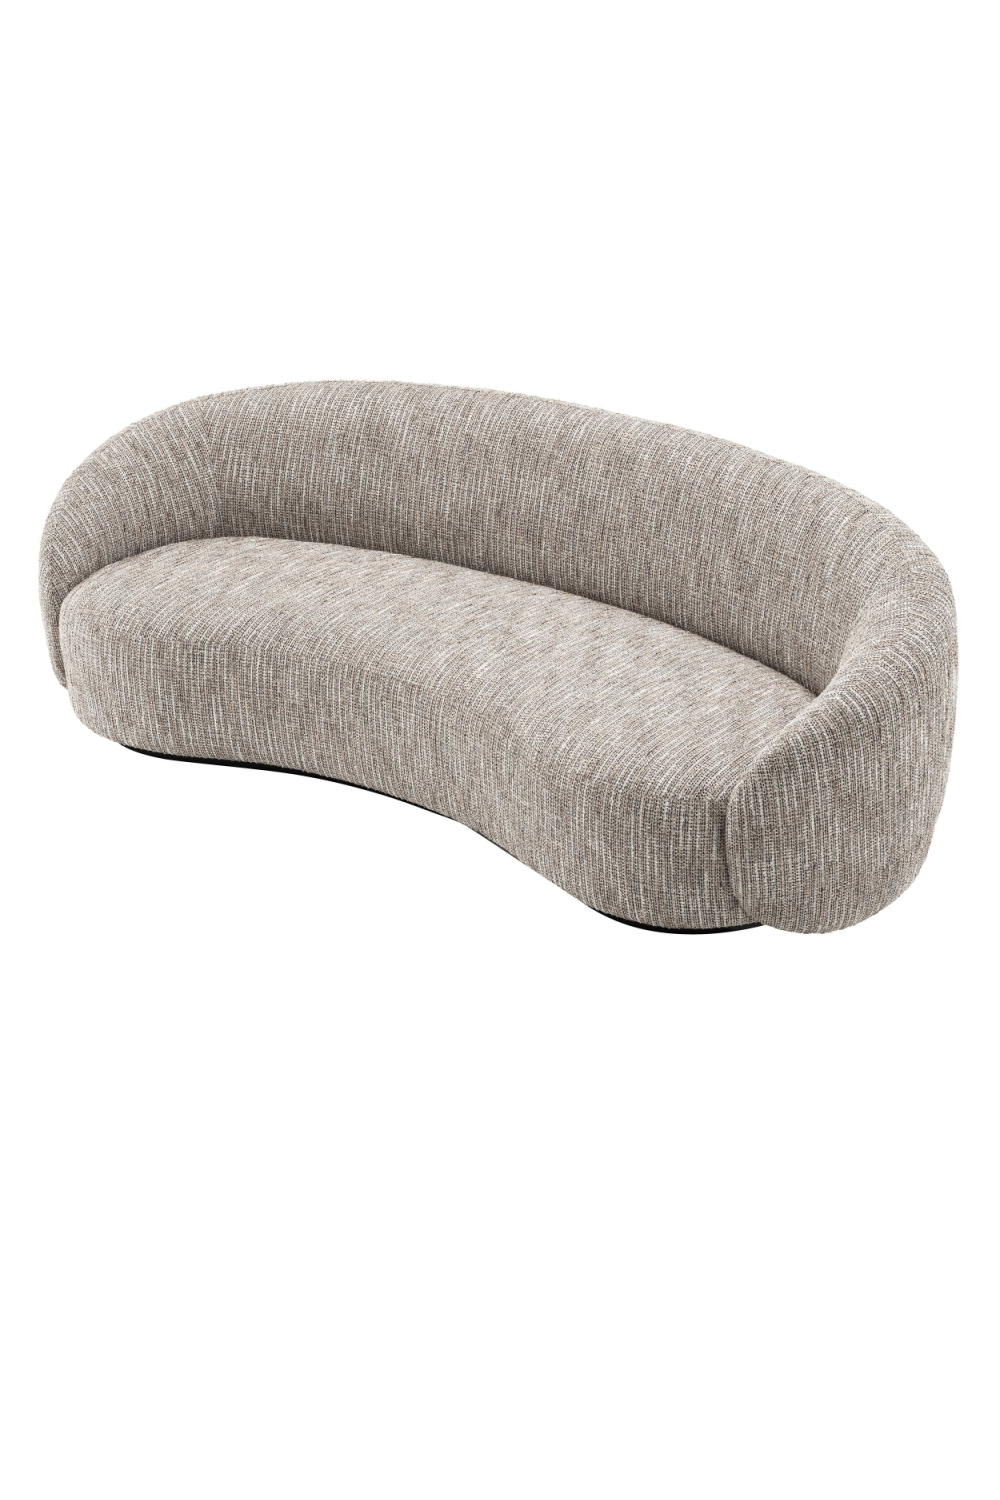 Organic Shaped Modern Sofa | Eichholtz Amore | Oroa.com